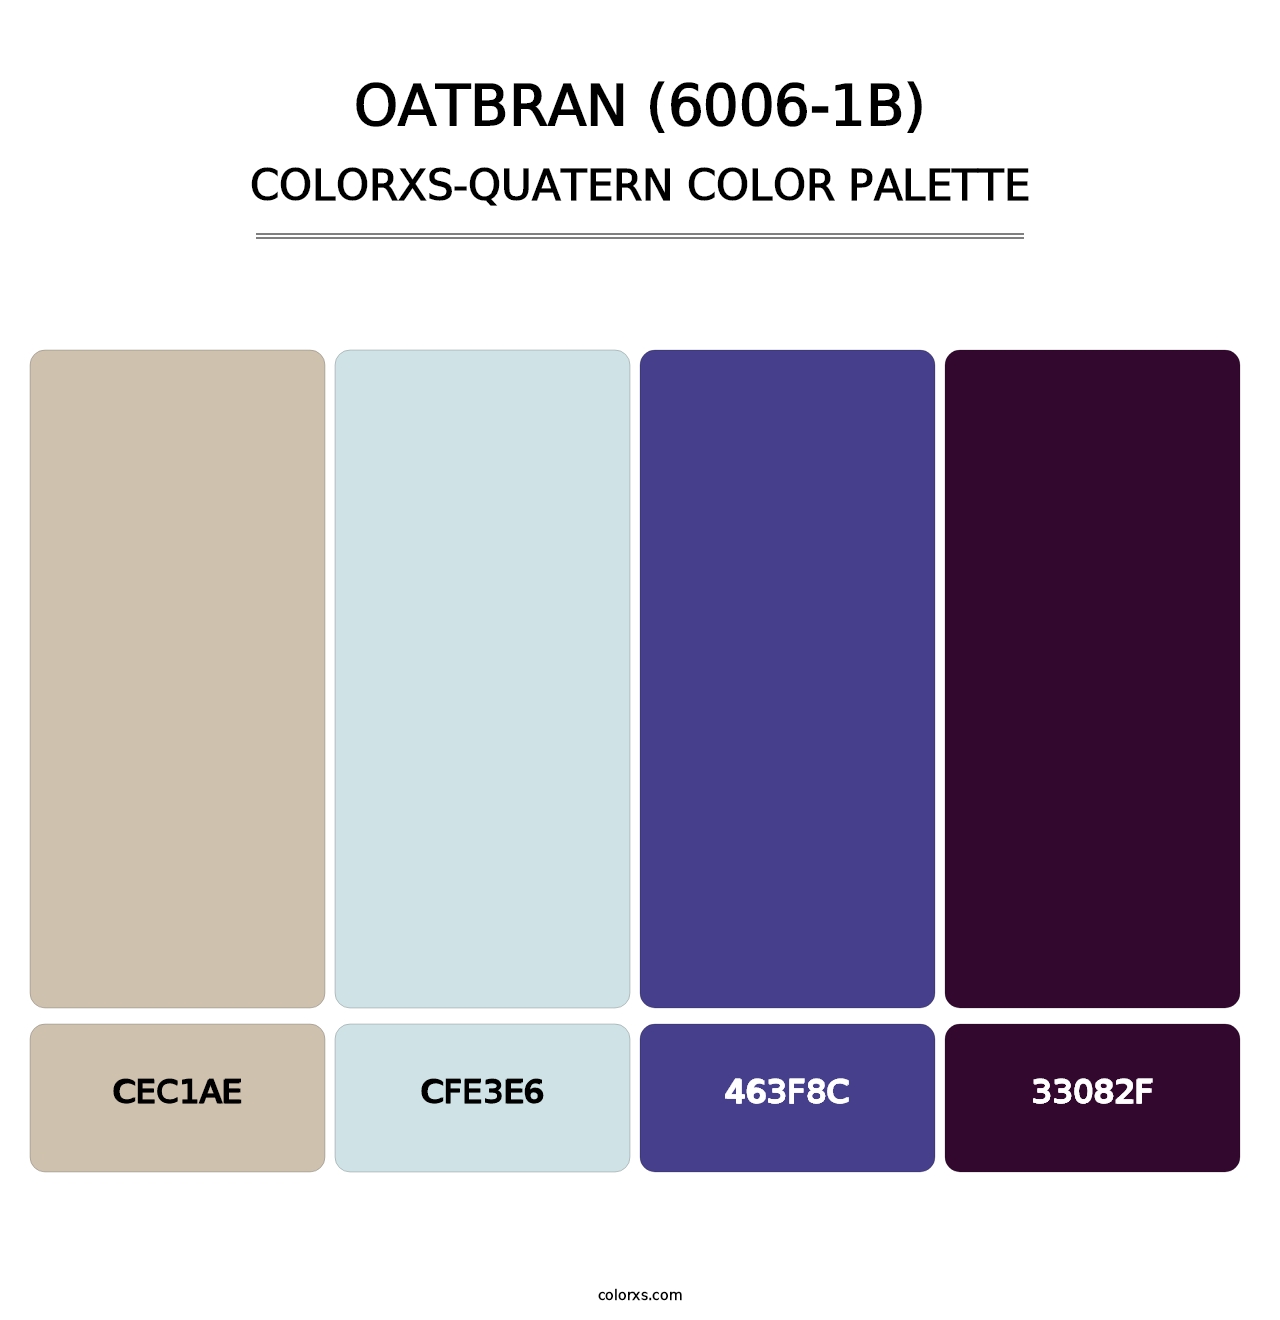 Oatbran (6006-1B) - Colorxs Quatern Palette